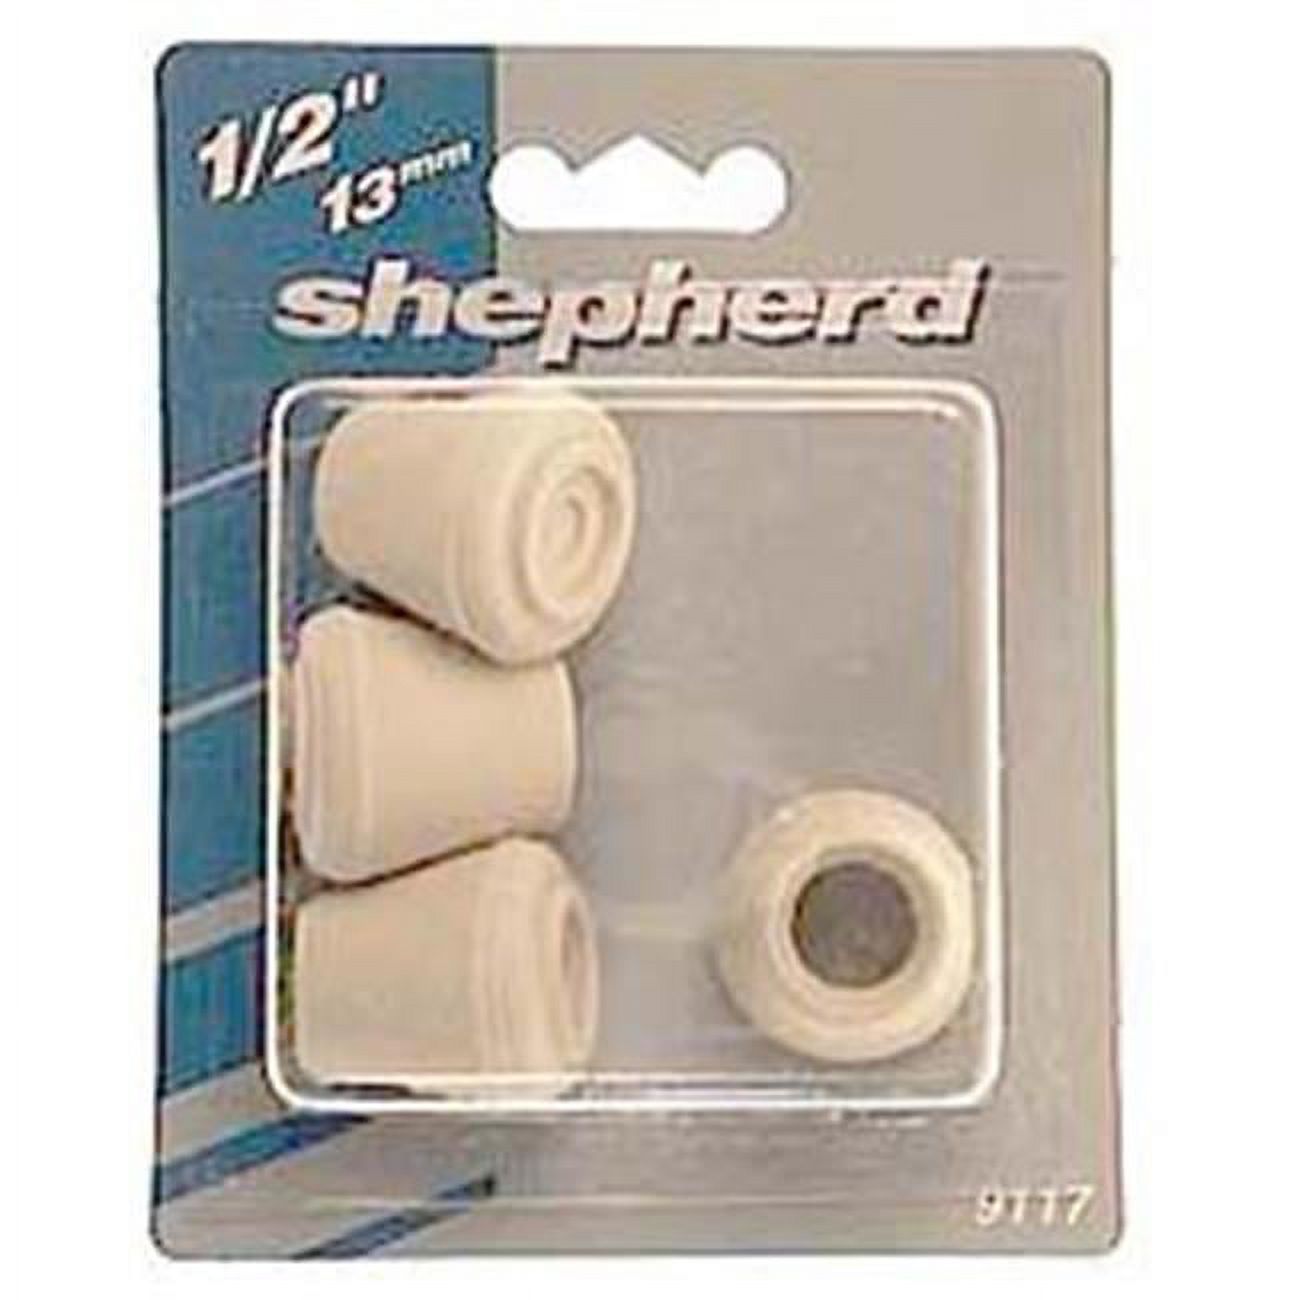 Shepherd 9129 4 Count 1.13 in. Black Rubber Leg Tips - image 1 of 3